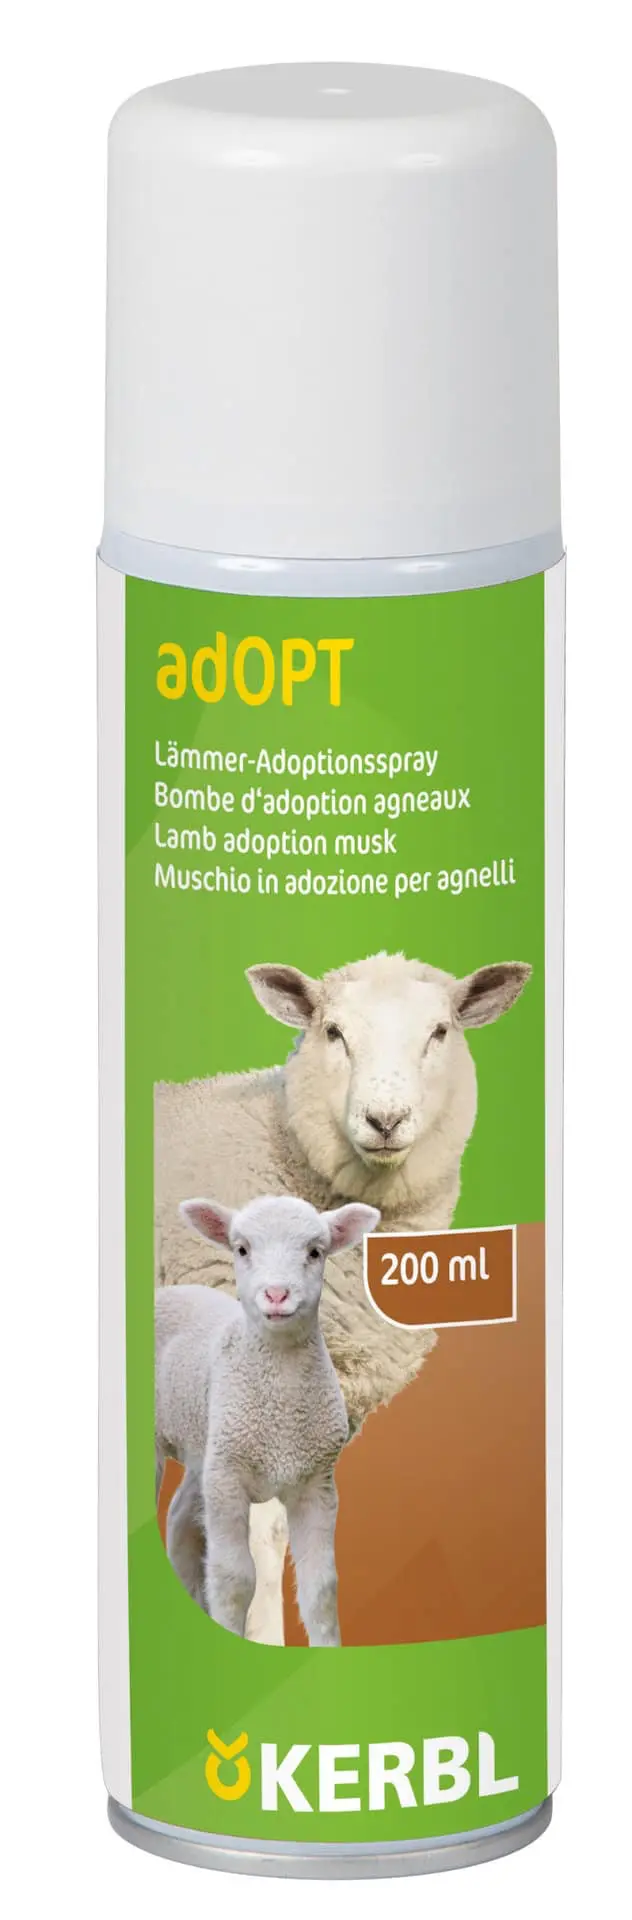 Lamb adoption spray adOPT, 200 ml